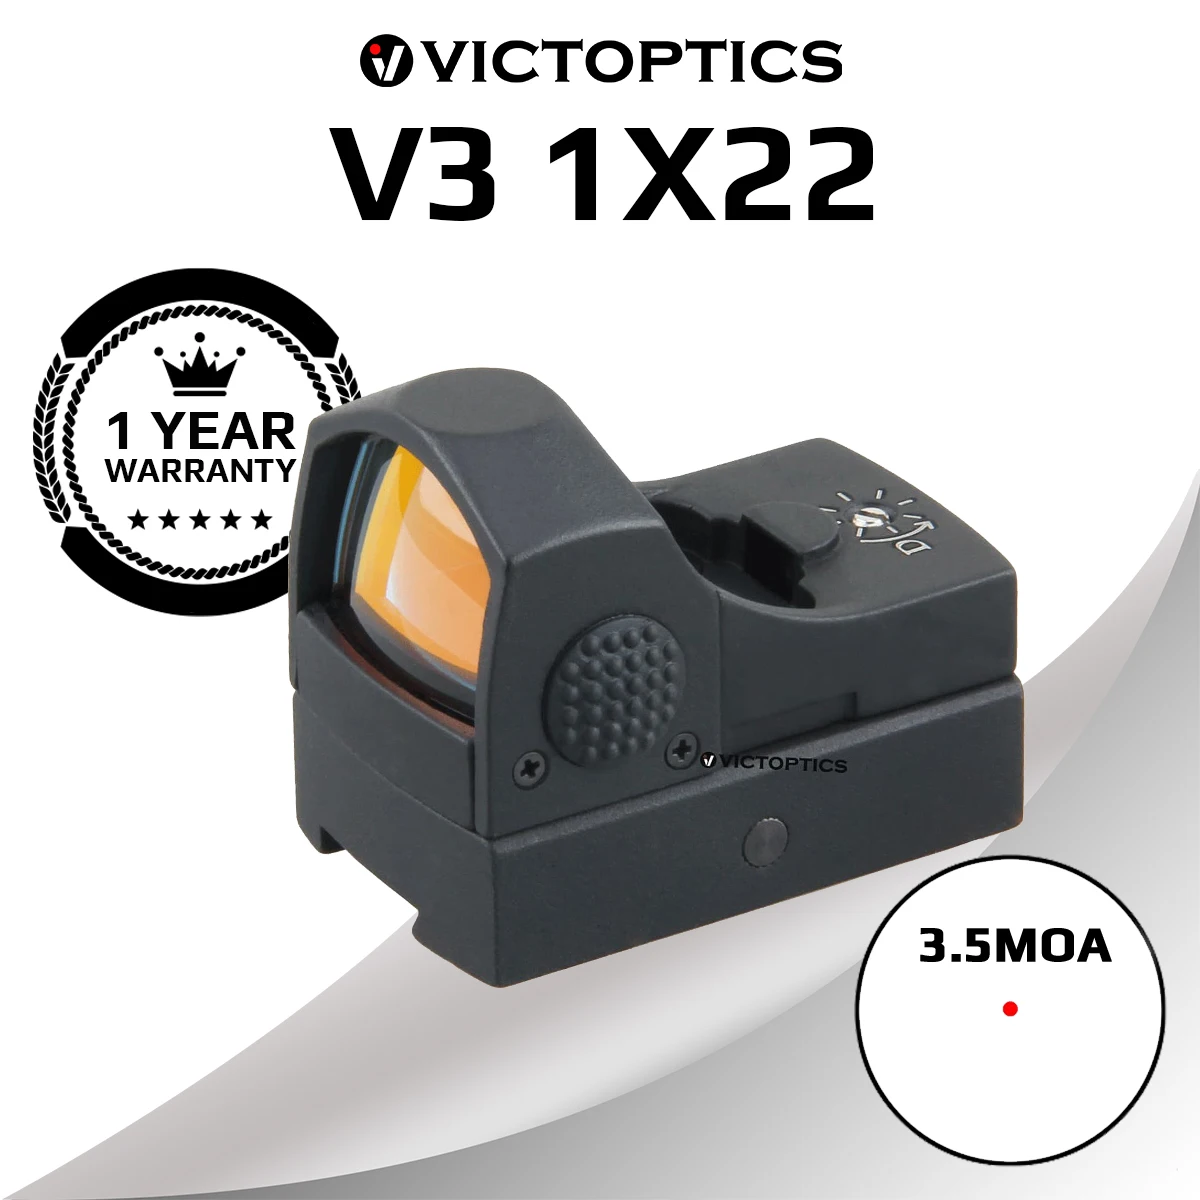 Victoptics V3 1x22 Dovetail Red Dot Sight 3.5MOA Dot Size 60 Minutes Auto Shut Down Rifle Scope Fit Pistol Glock 17 19